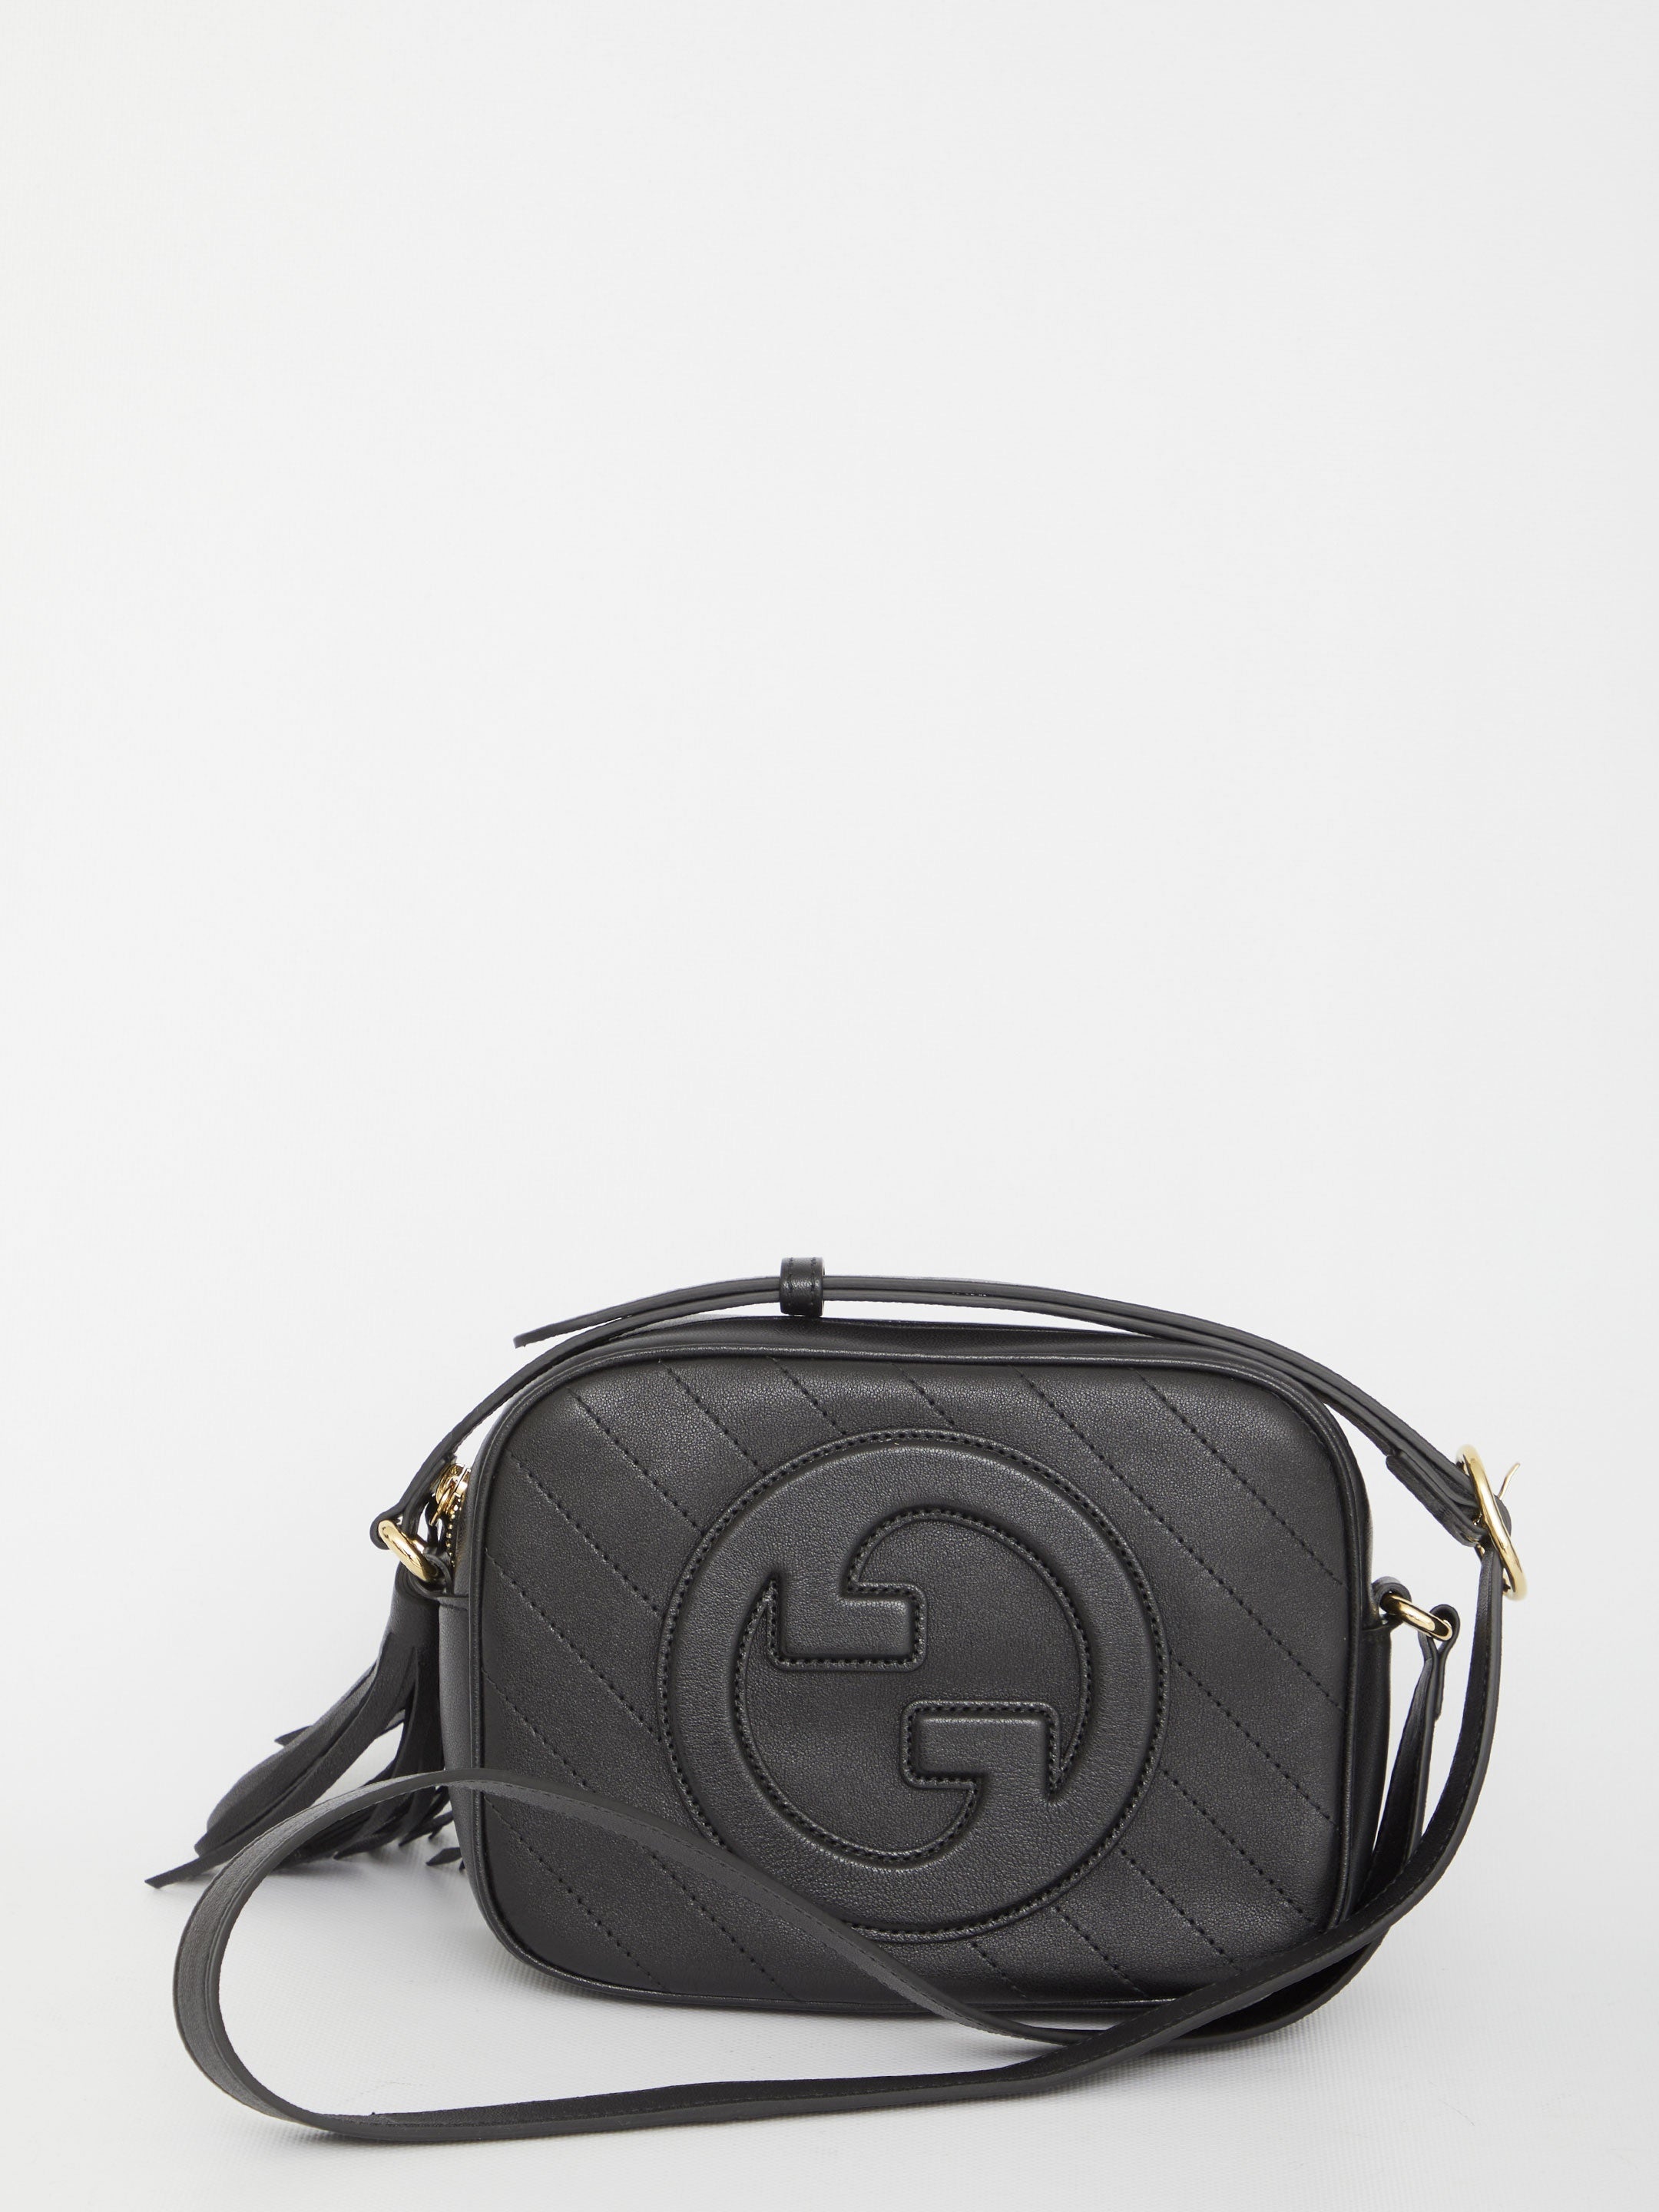 GUCCI-OUTLET-SALE-Small-Gucci-Blondie-bag-Taschen-QT-BLACK-ARCHIVE-COLLECTION.jpg